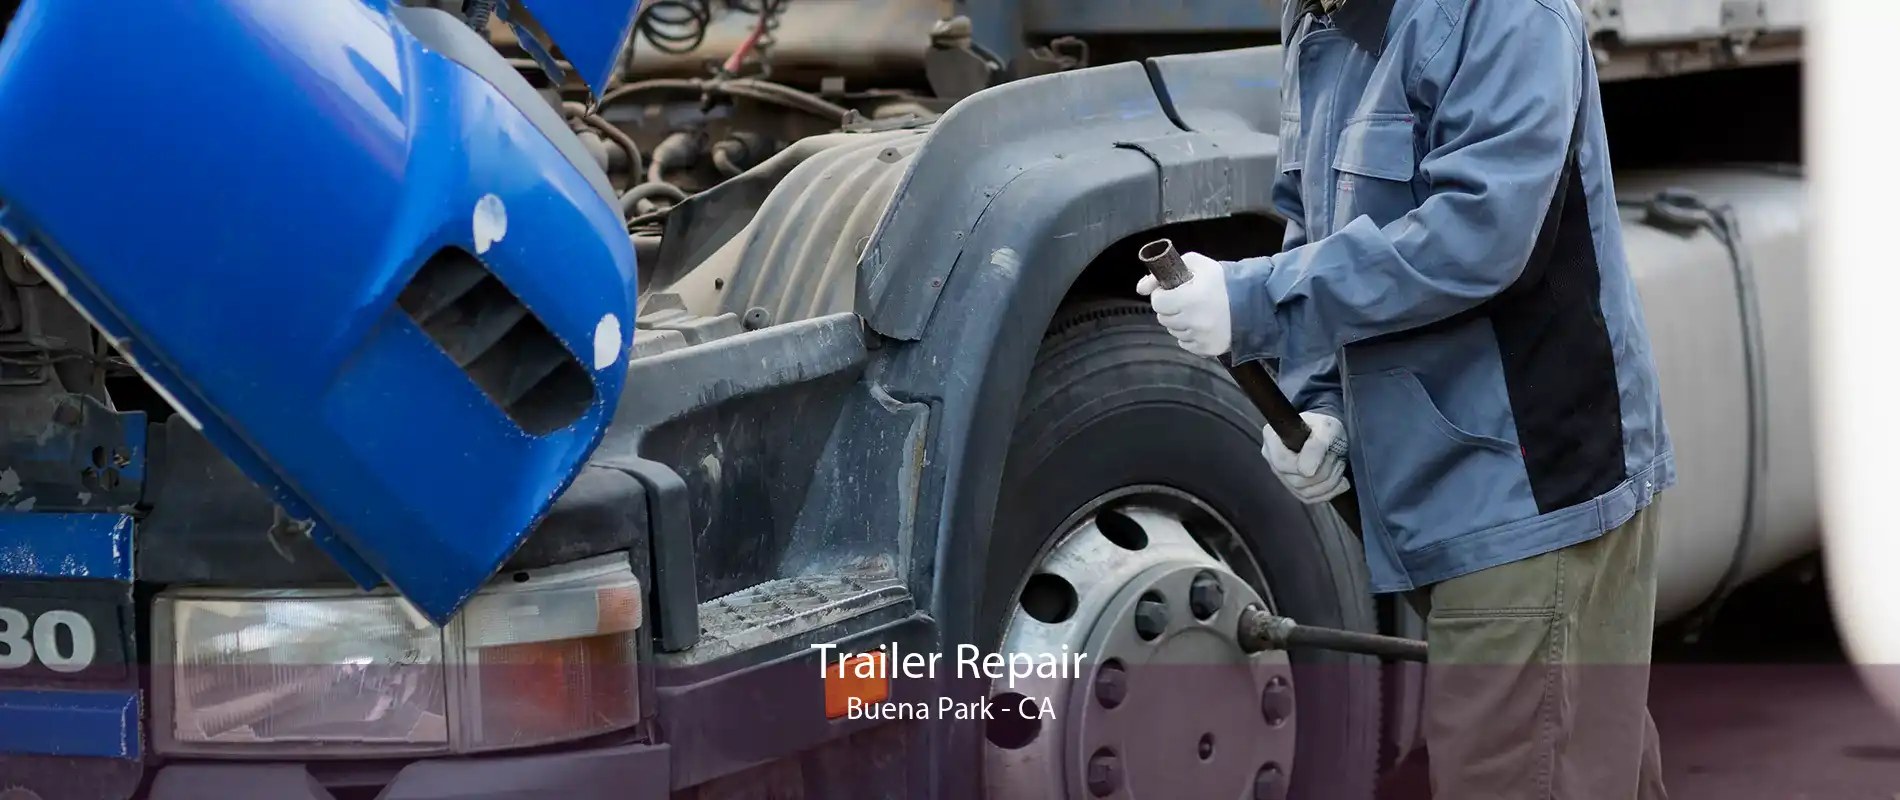 Trailer Repair Buena Park - CA